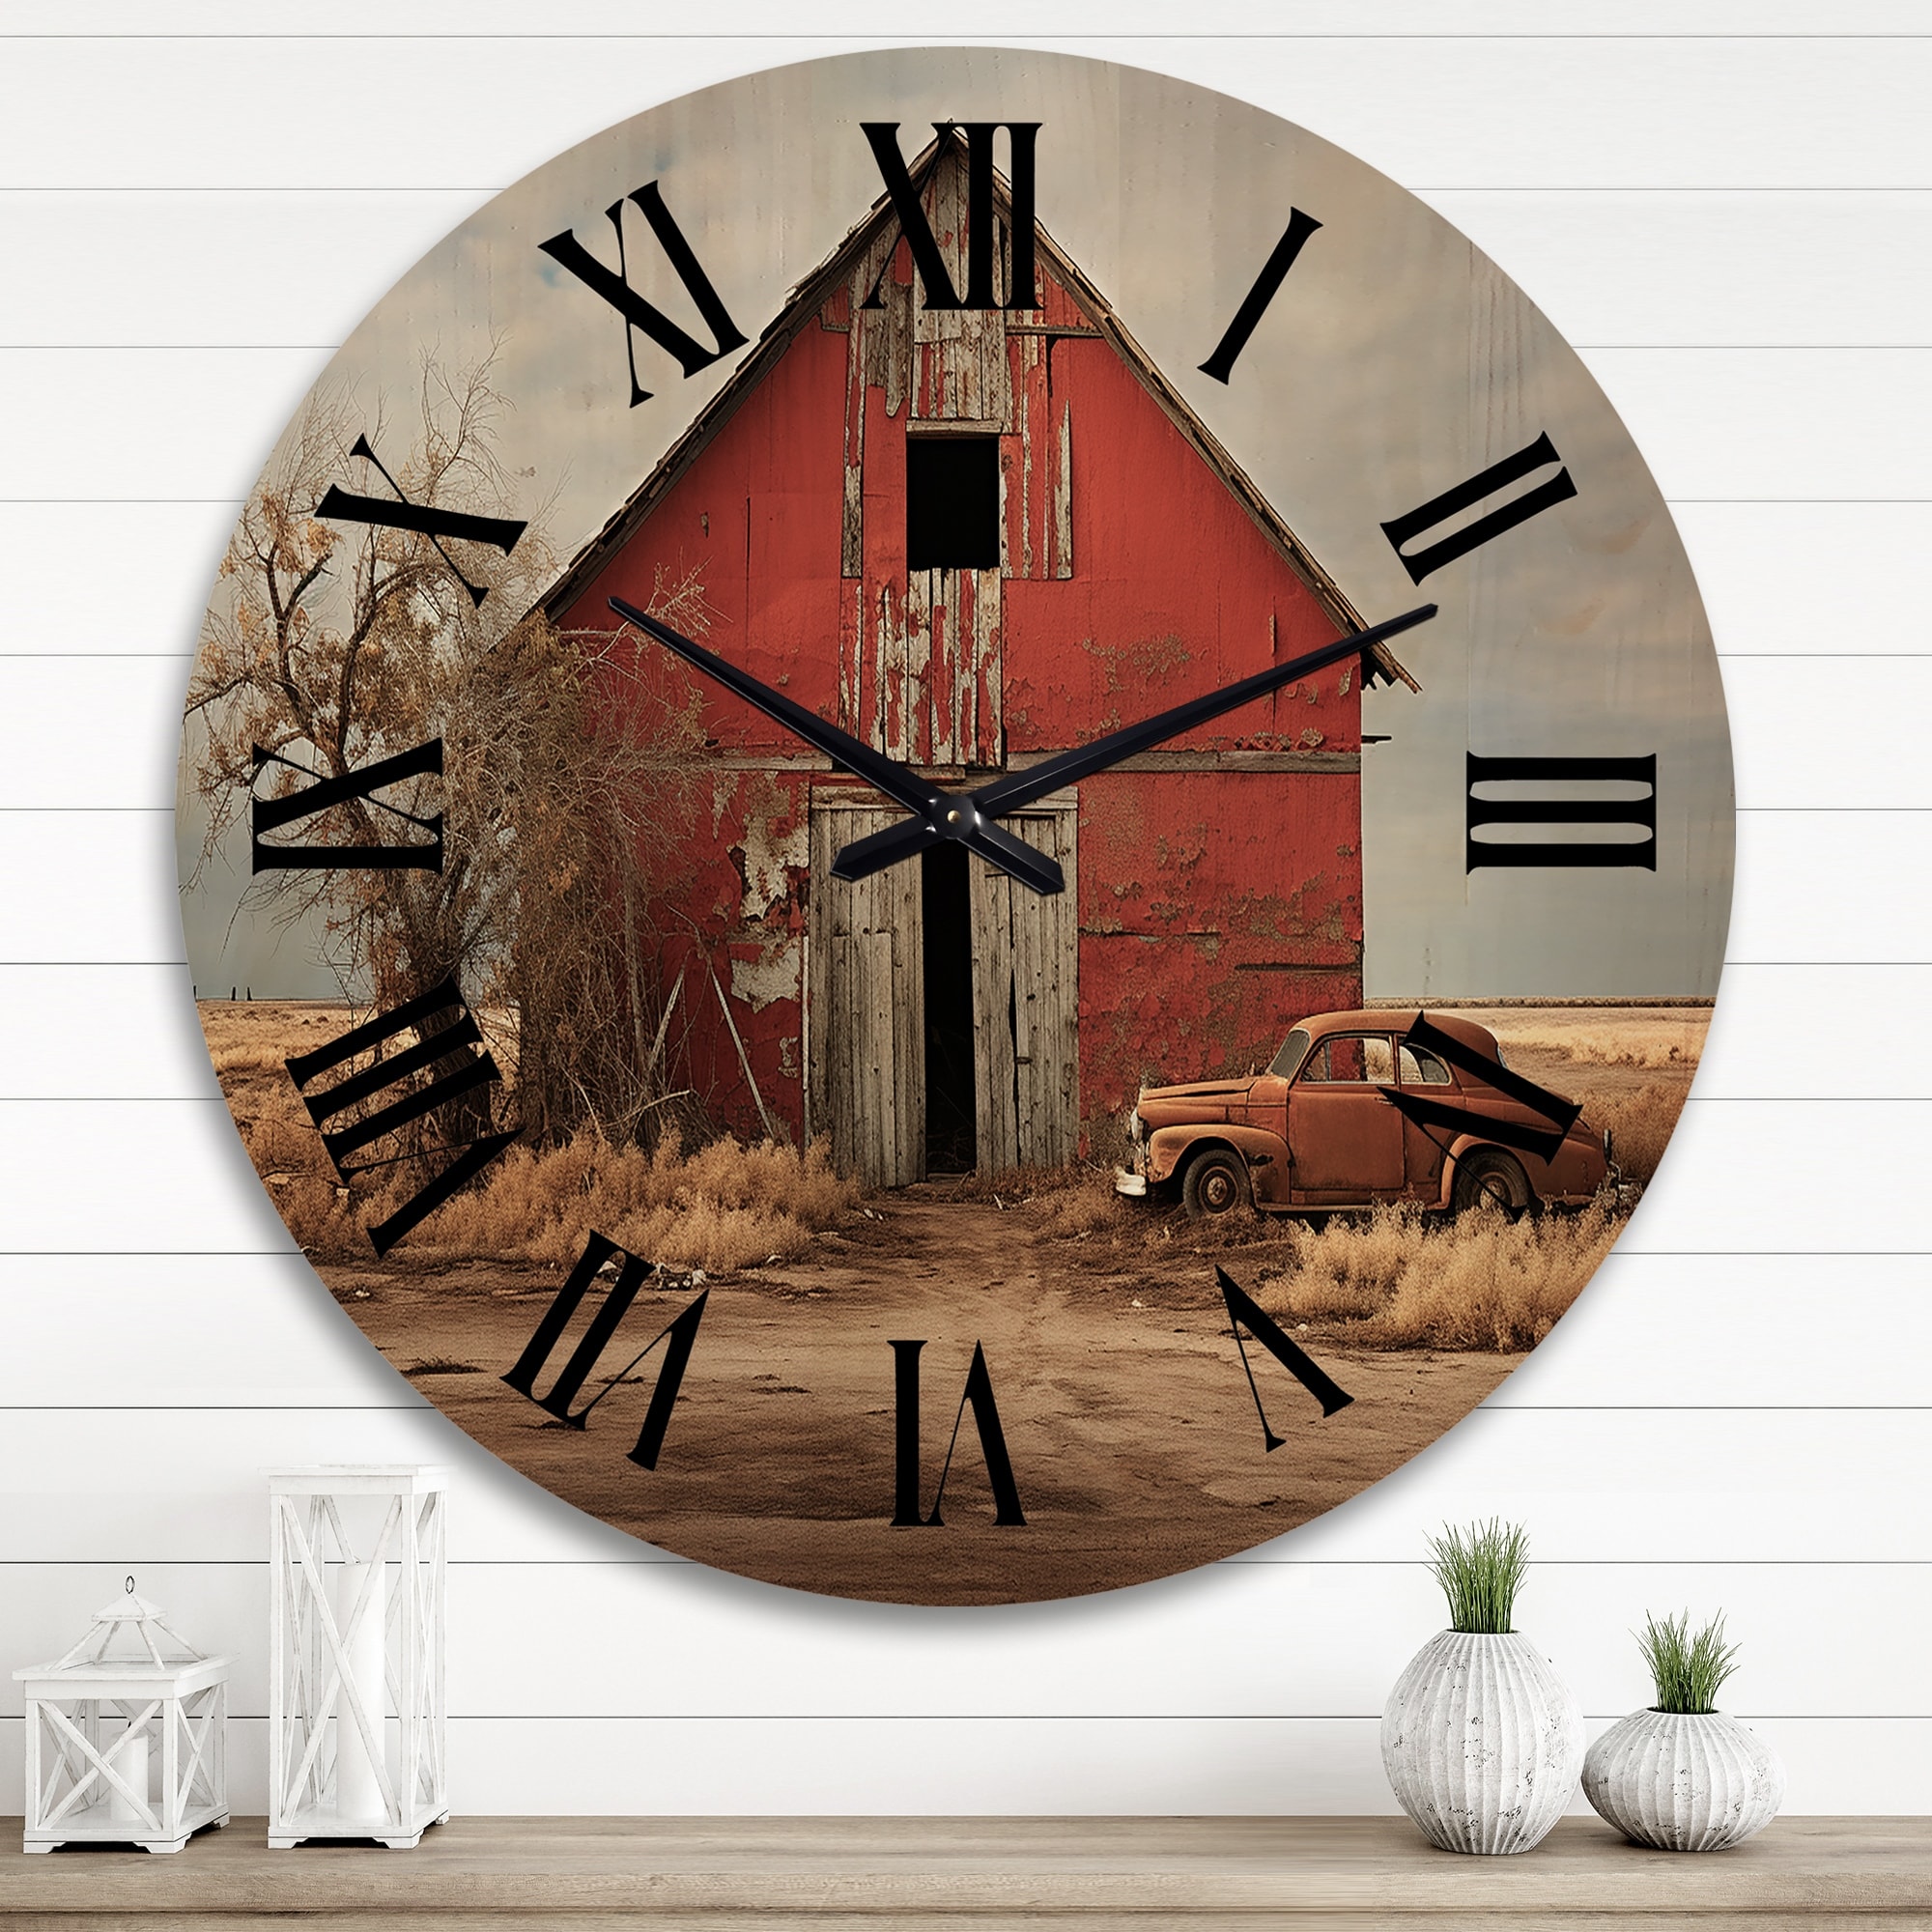 Mantel clock  Canadian Woodworking